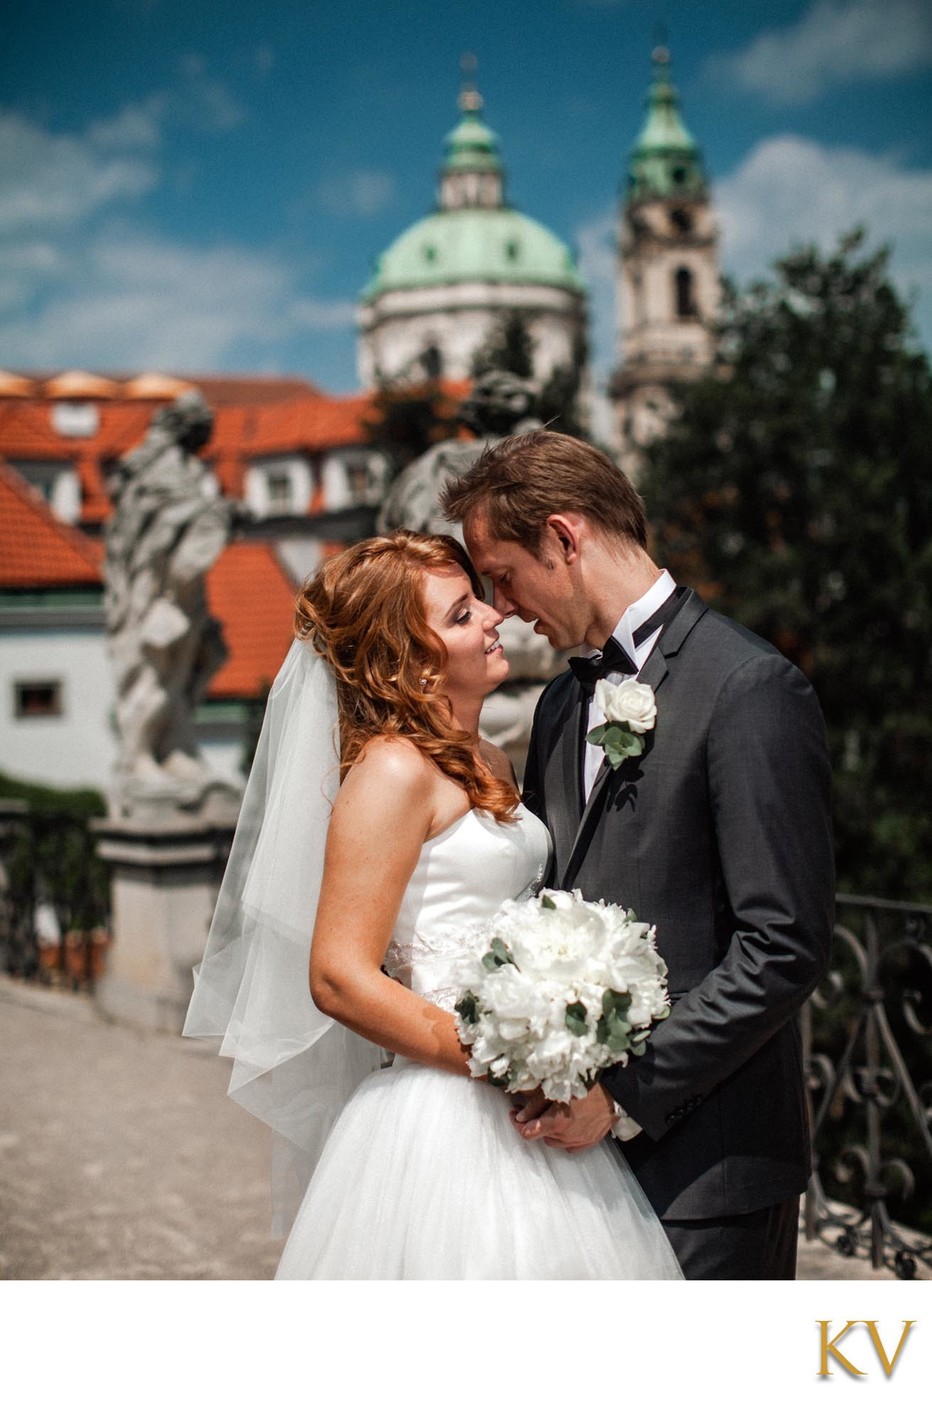 Polya & Dirk - Vrtba wedding